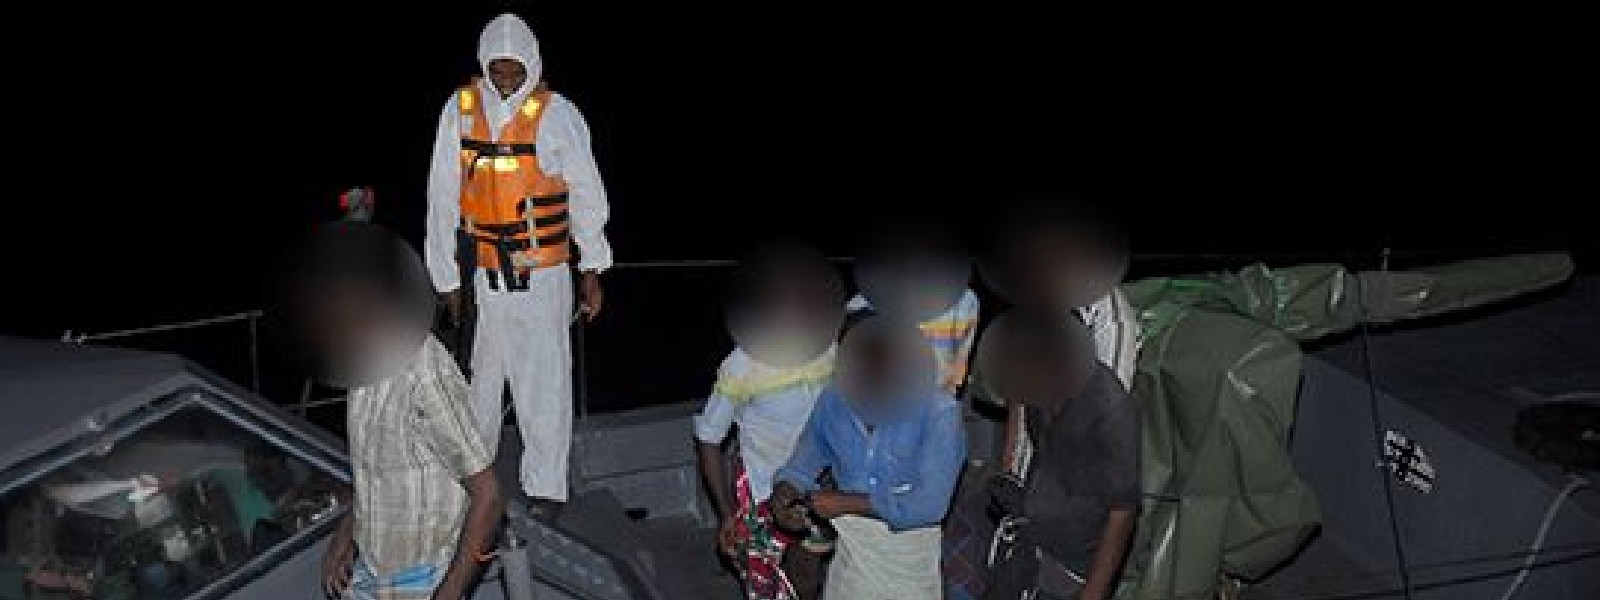 Navy seizes poaching trawler in Mannar seas